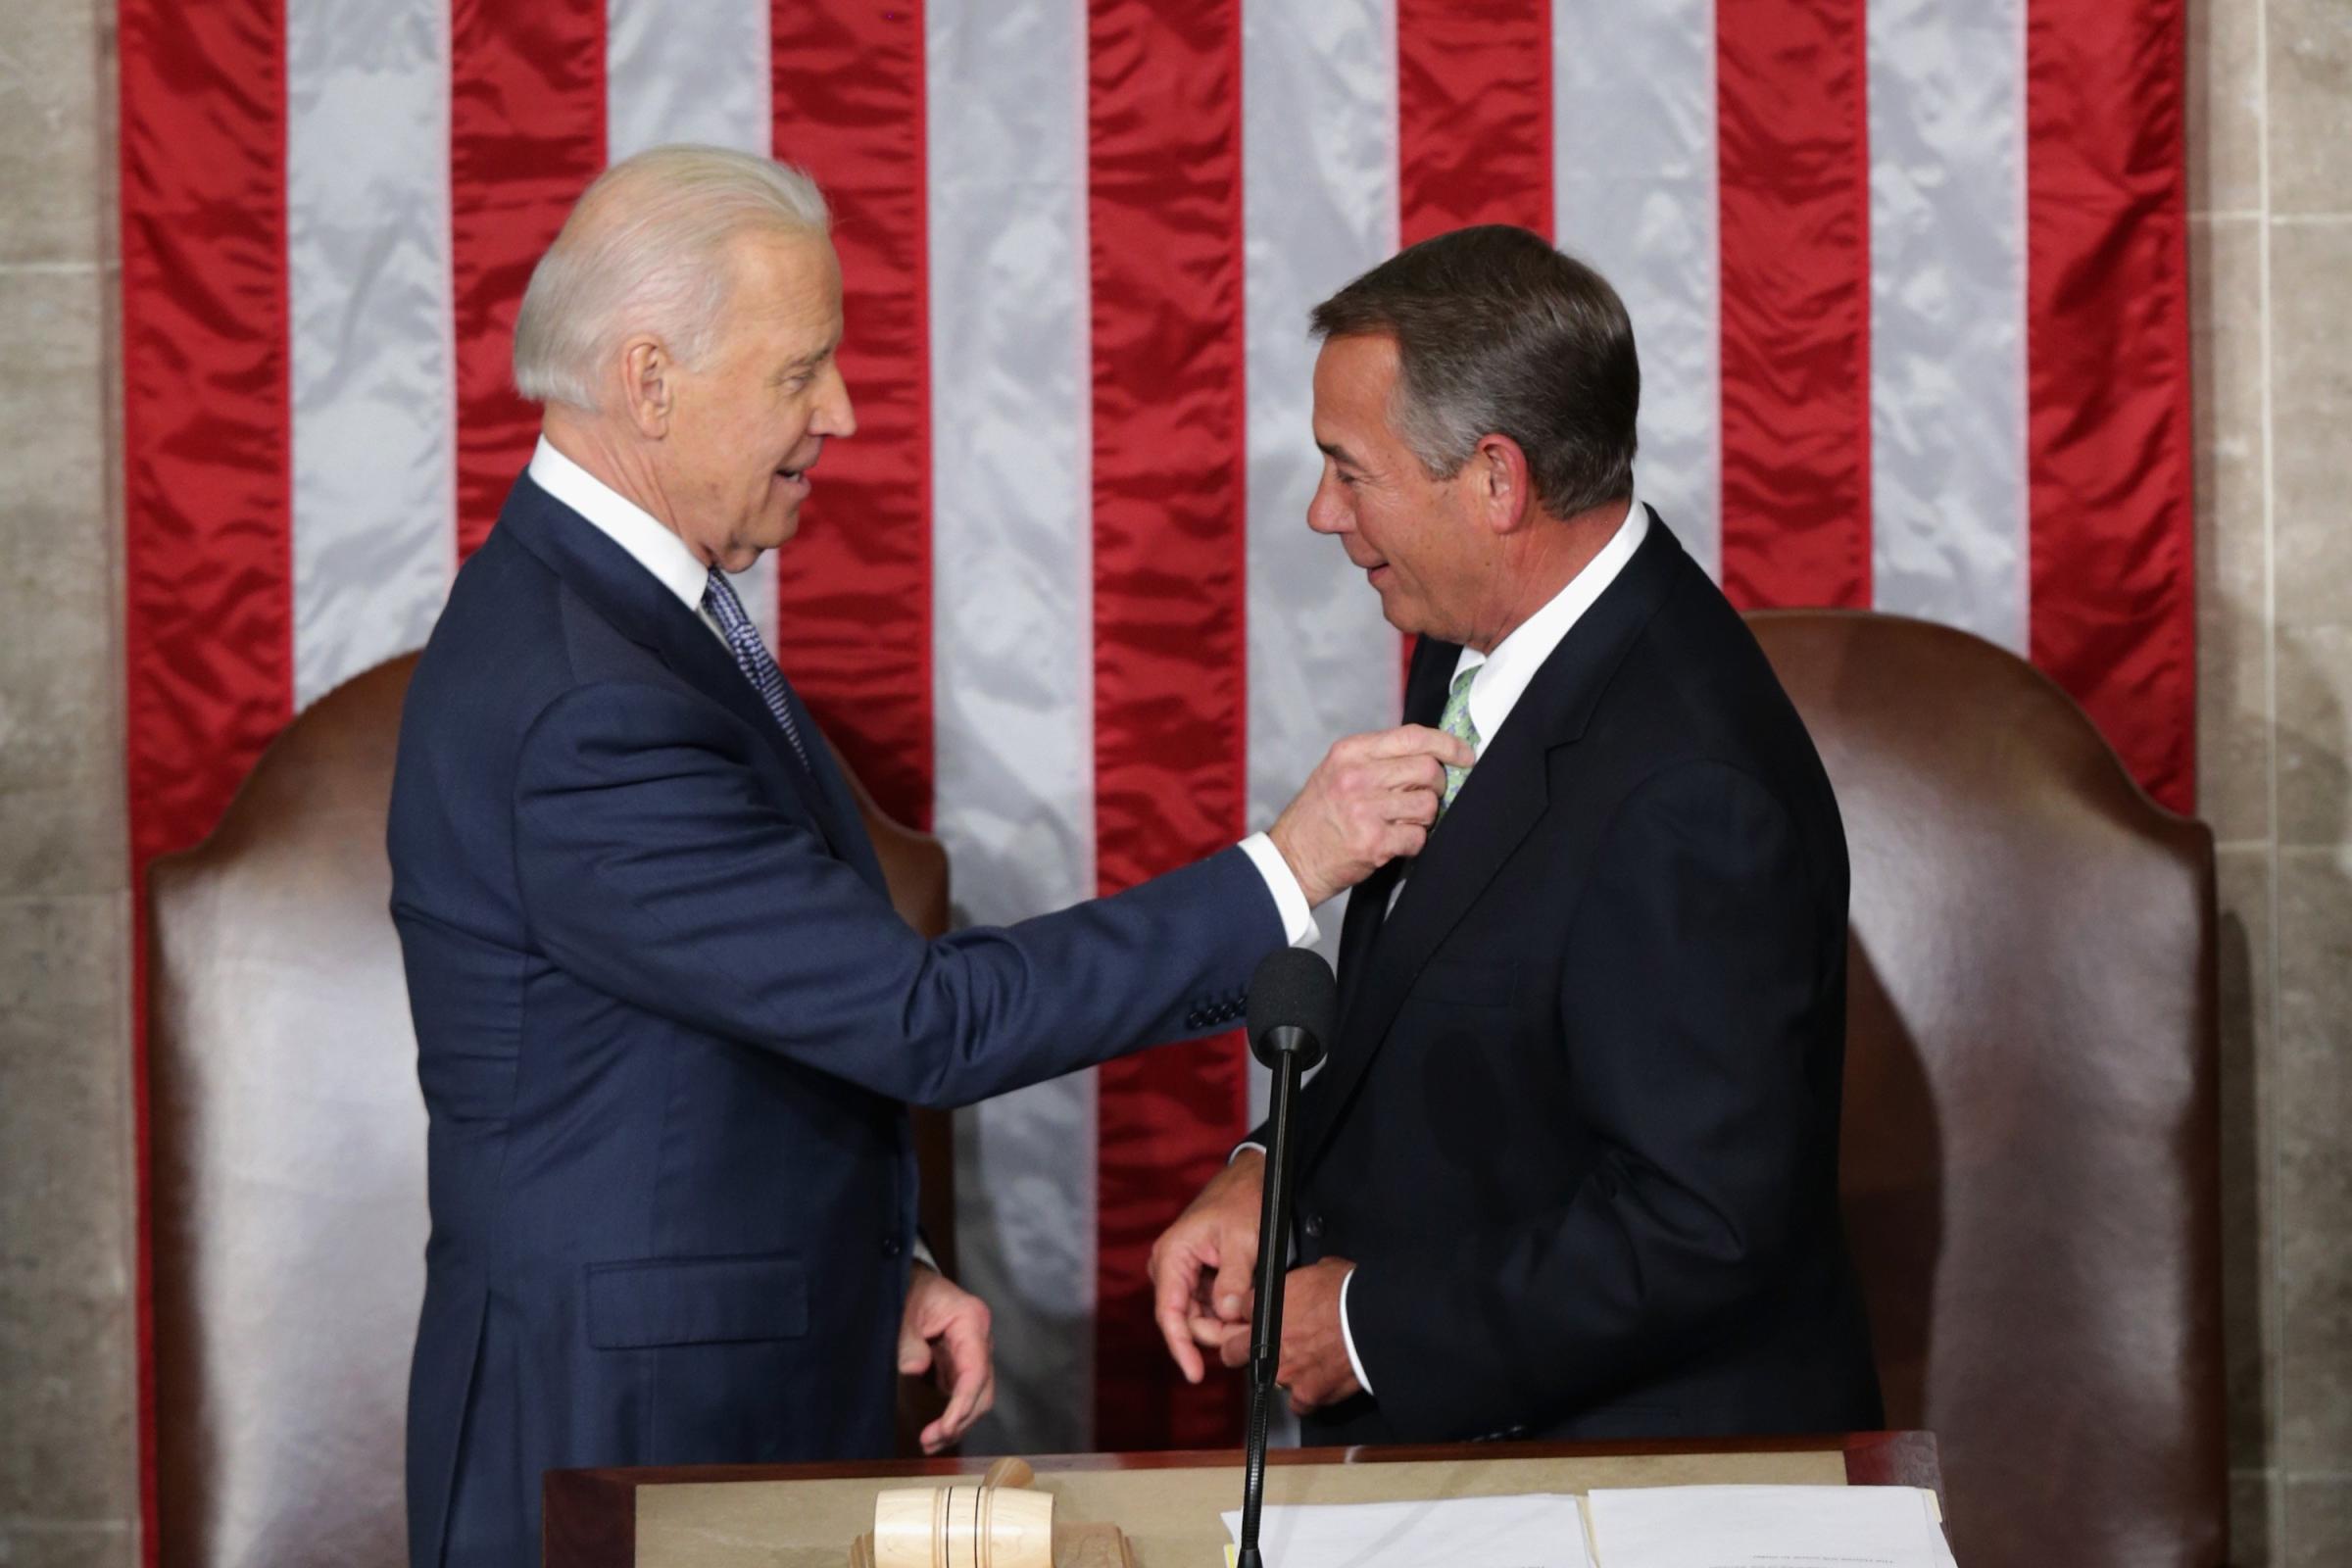 Vice President Joe Biden fixes House Speaker John Boehner's tie.